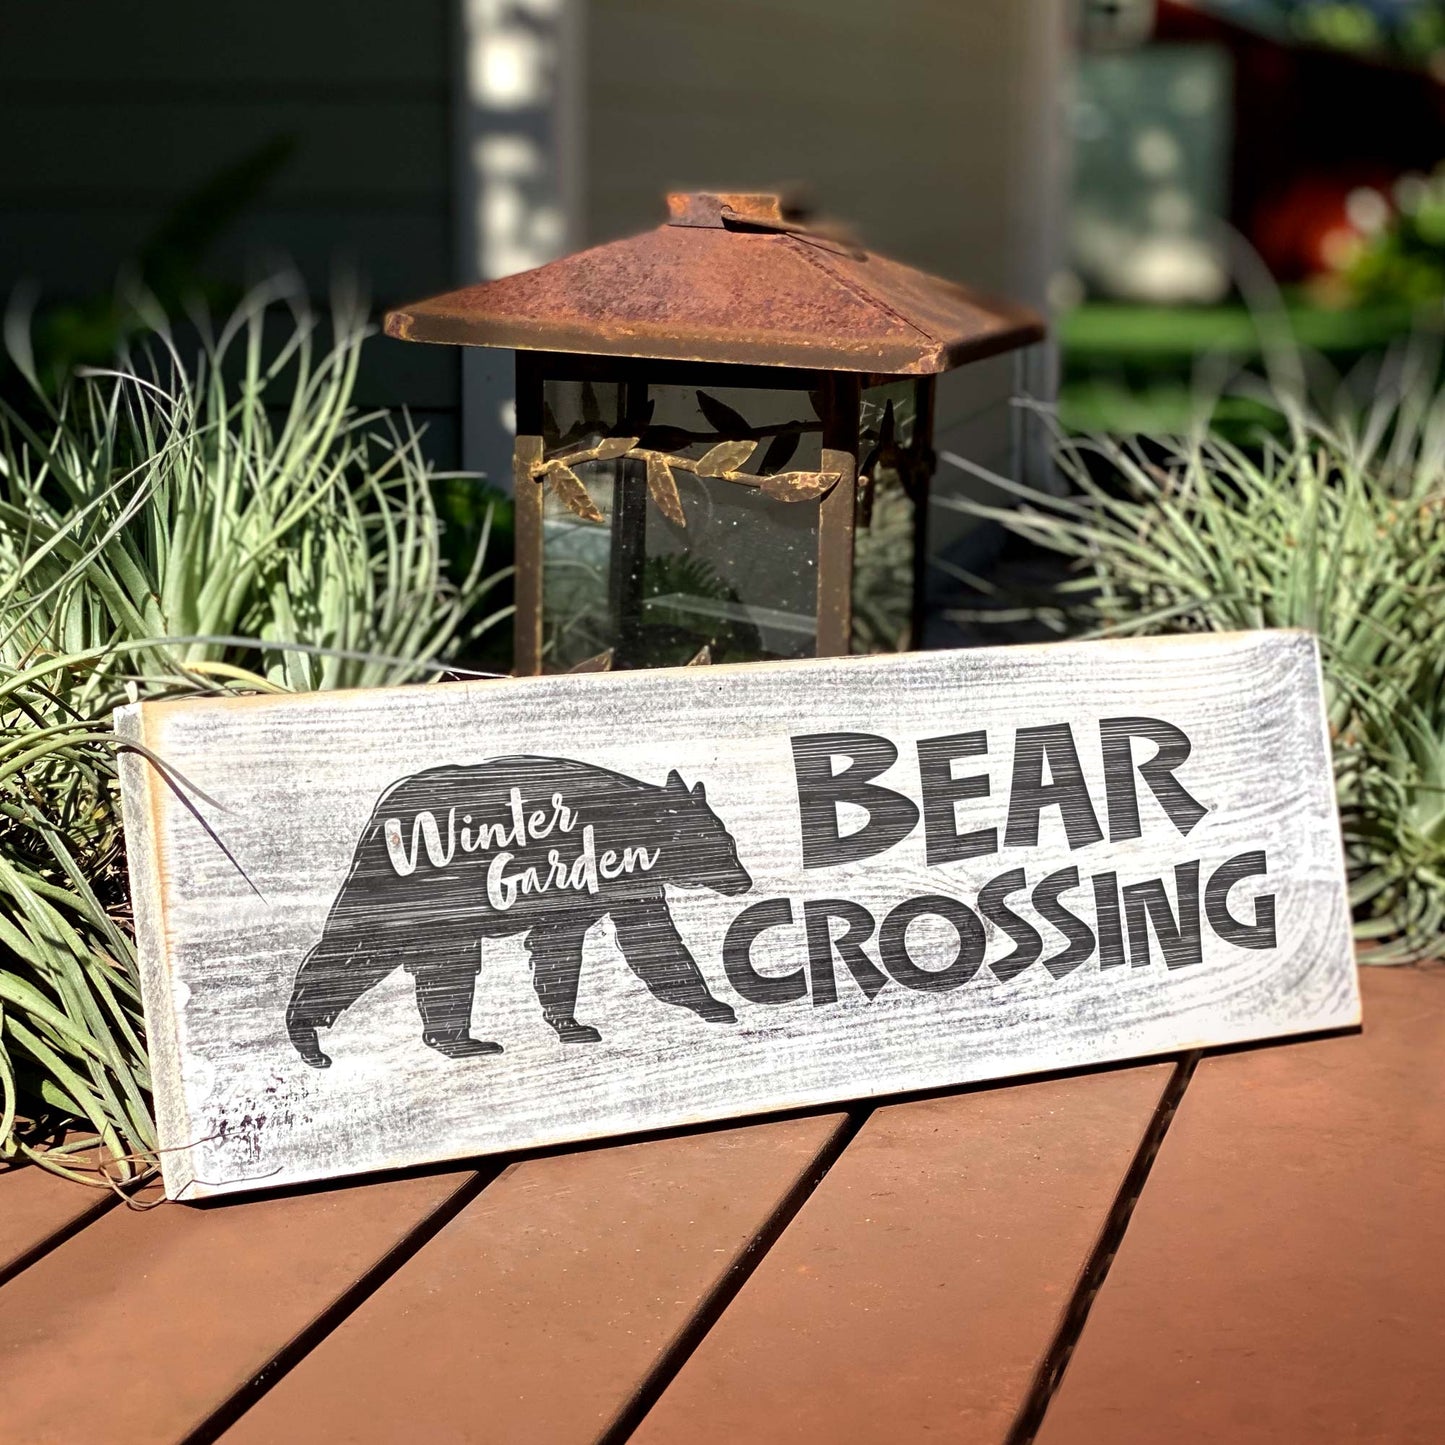 Winter Garden Bear Crossing - Handcrafted Artisan Wood Sign